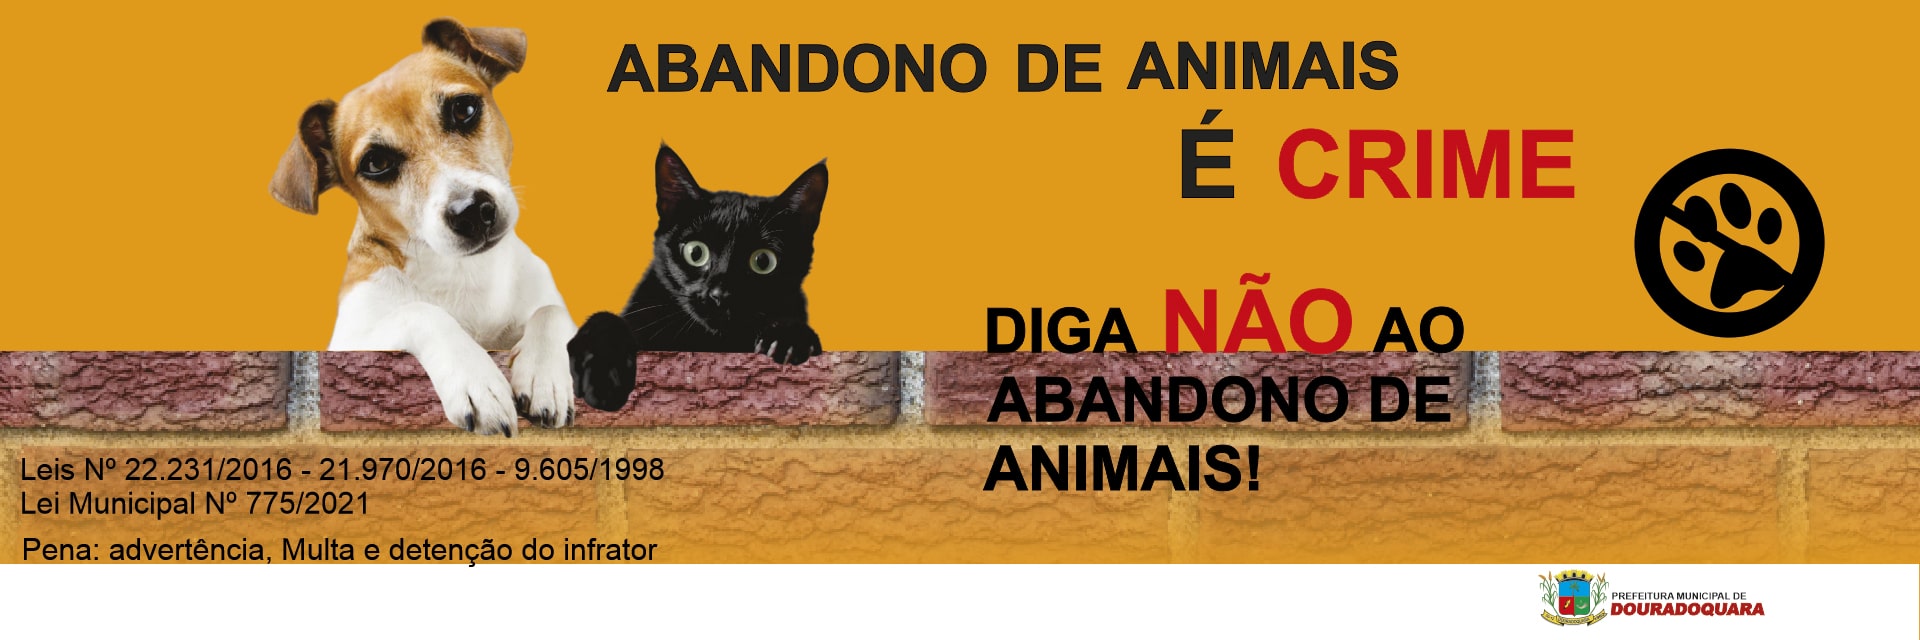 campanha abandono animais